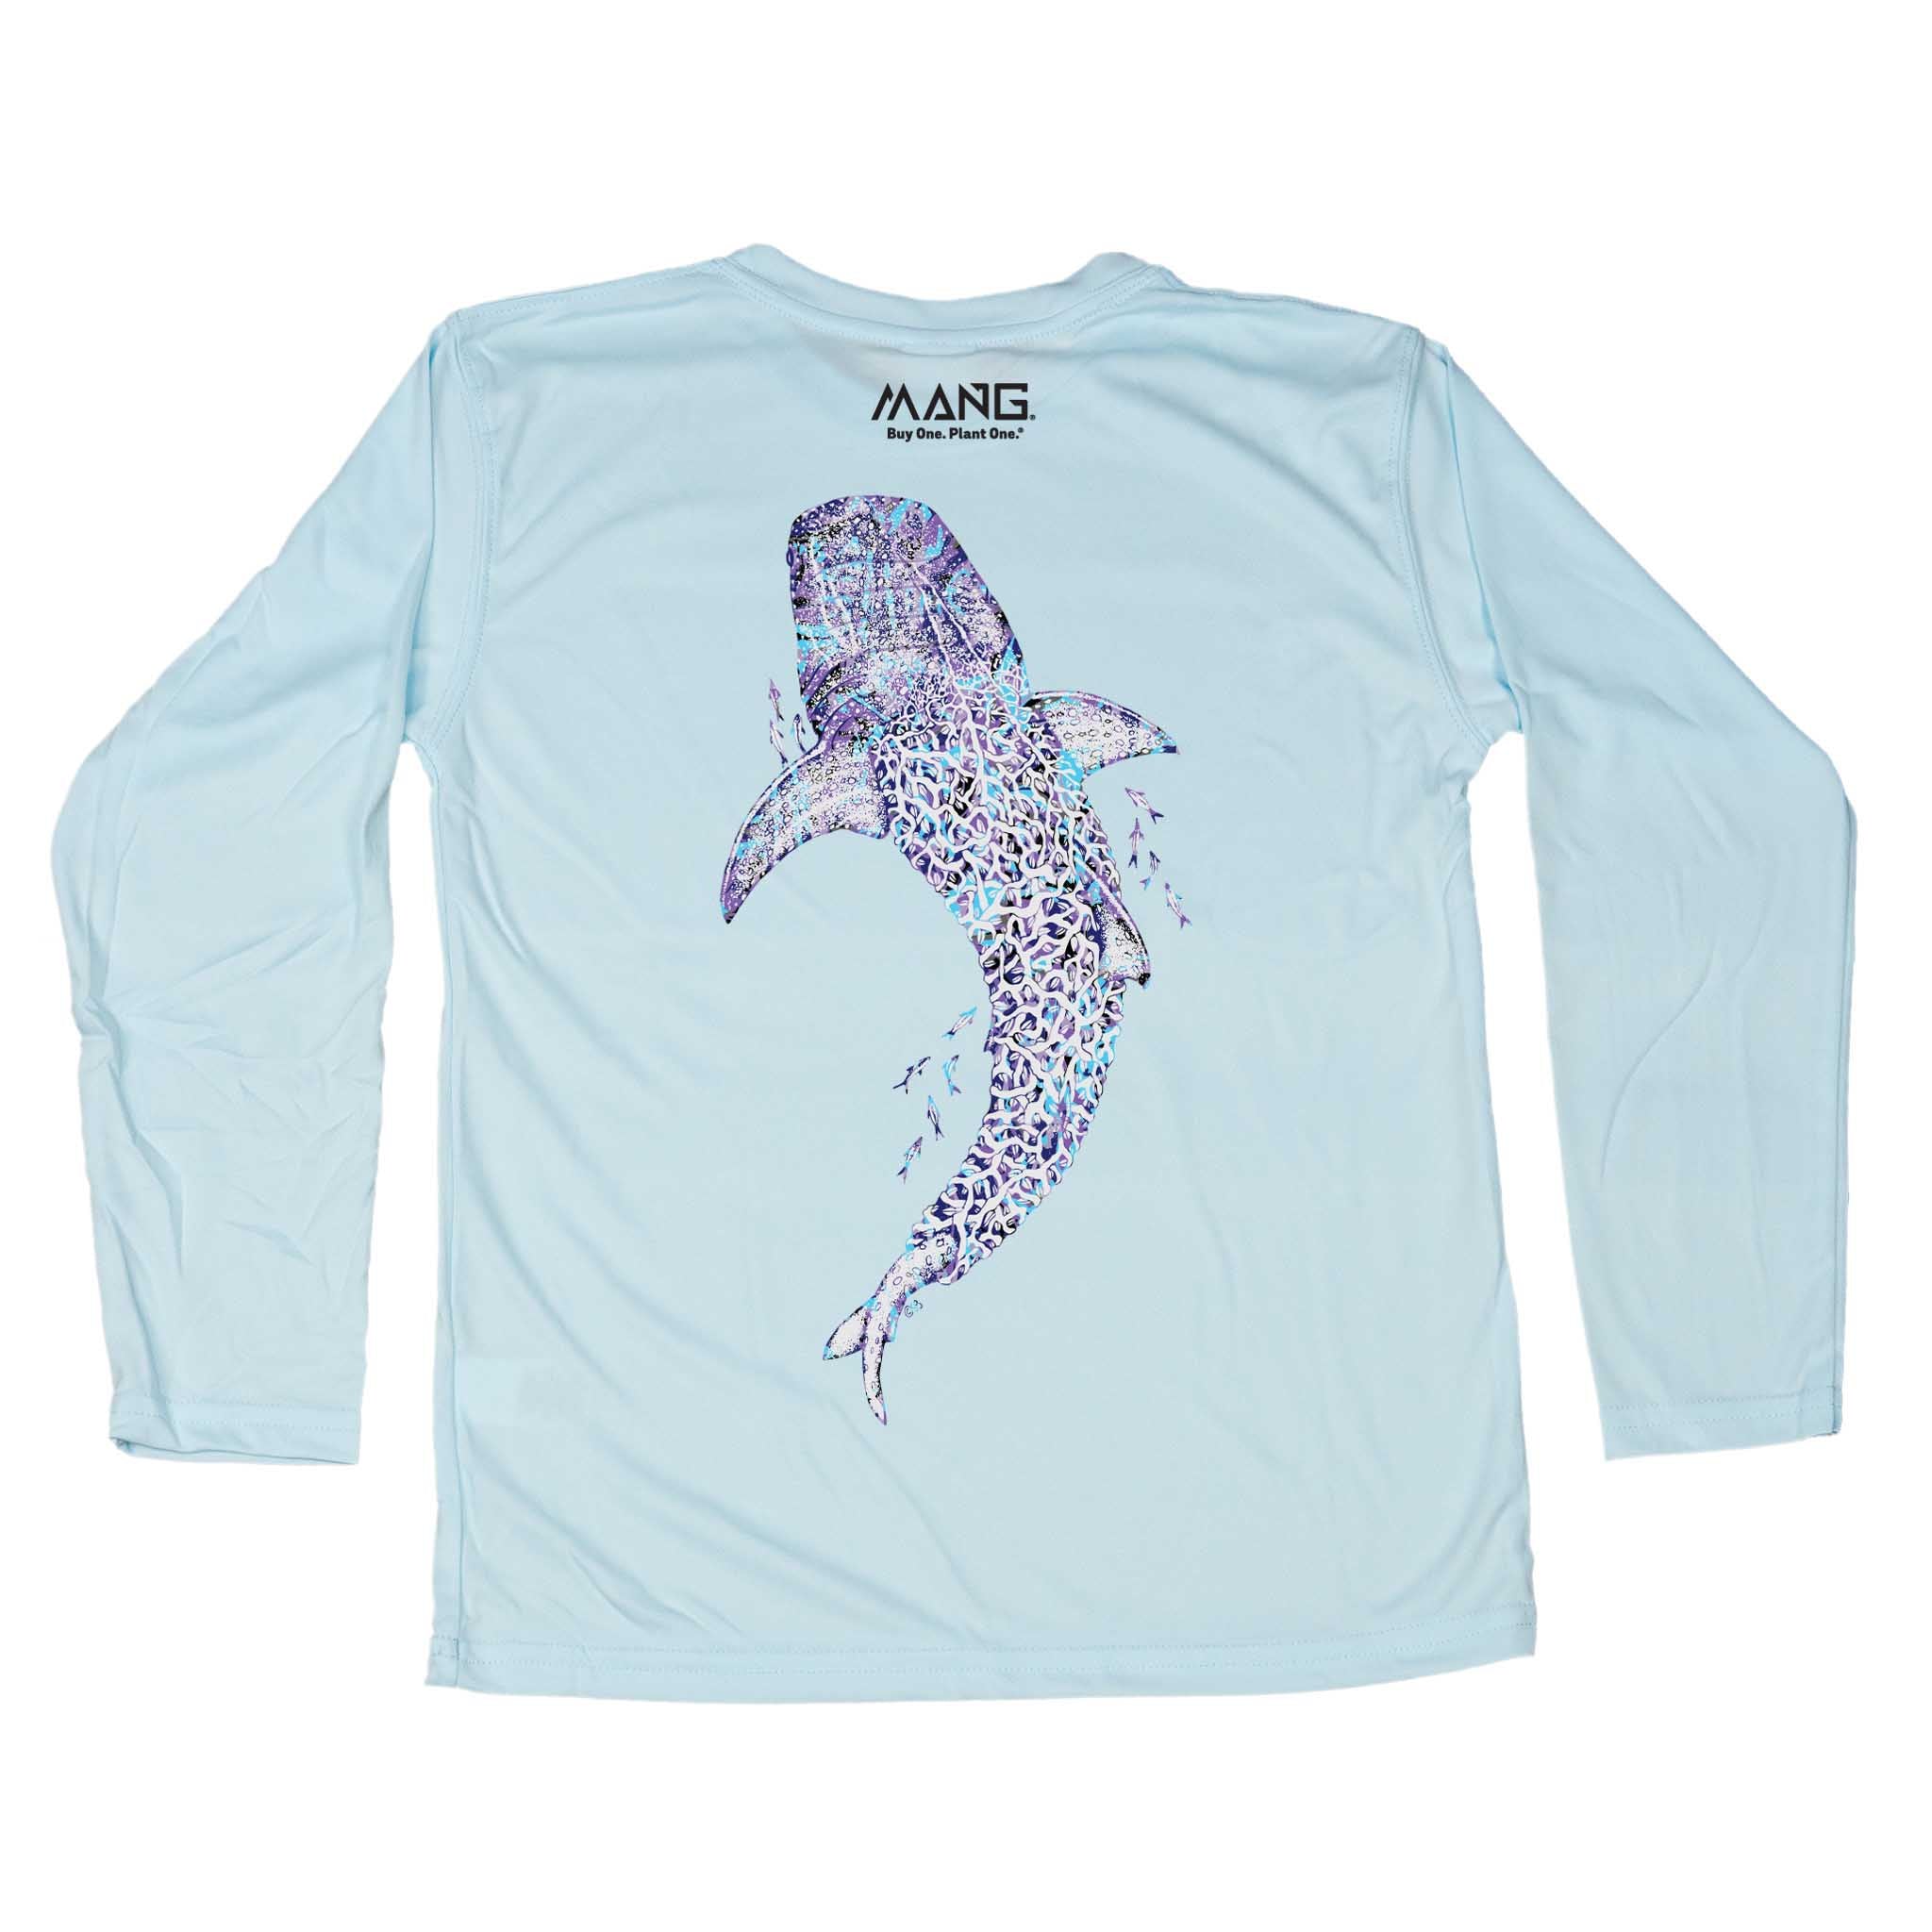 MANG Whale Shark MANG - Youth - YS-Arctic Blue